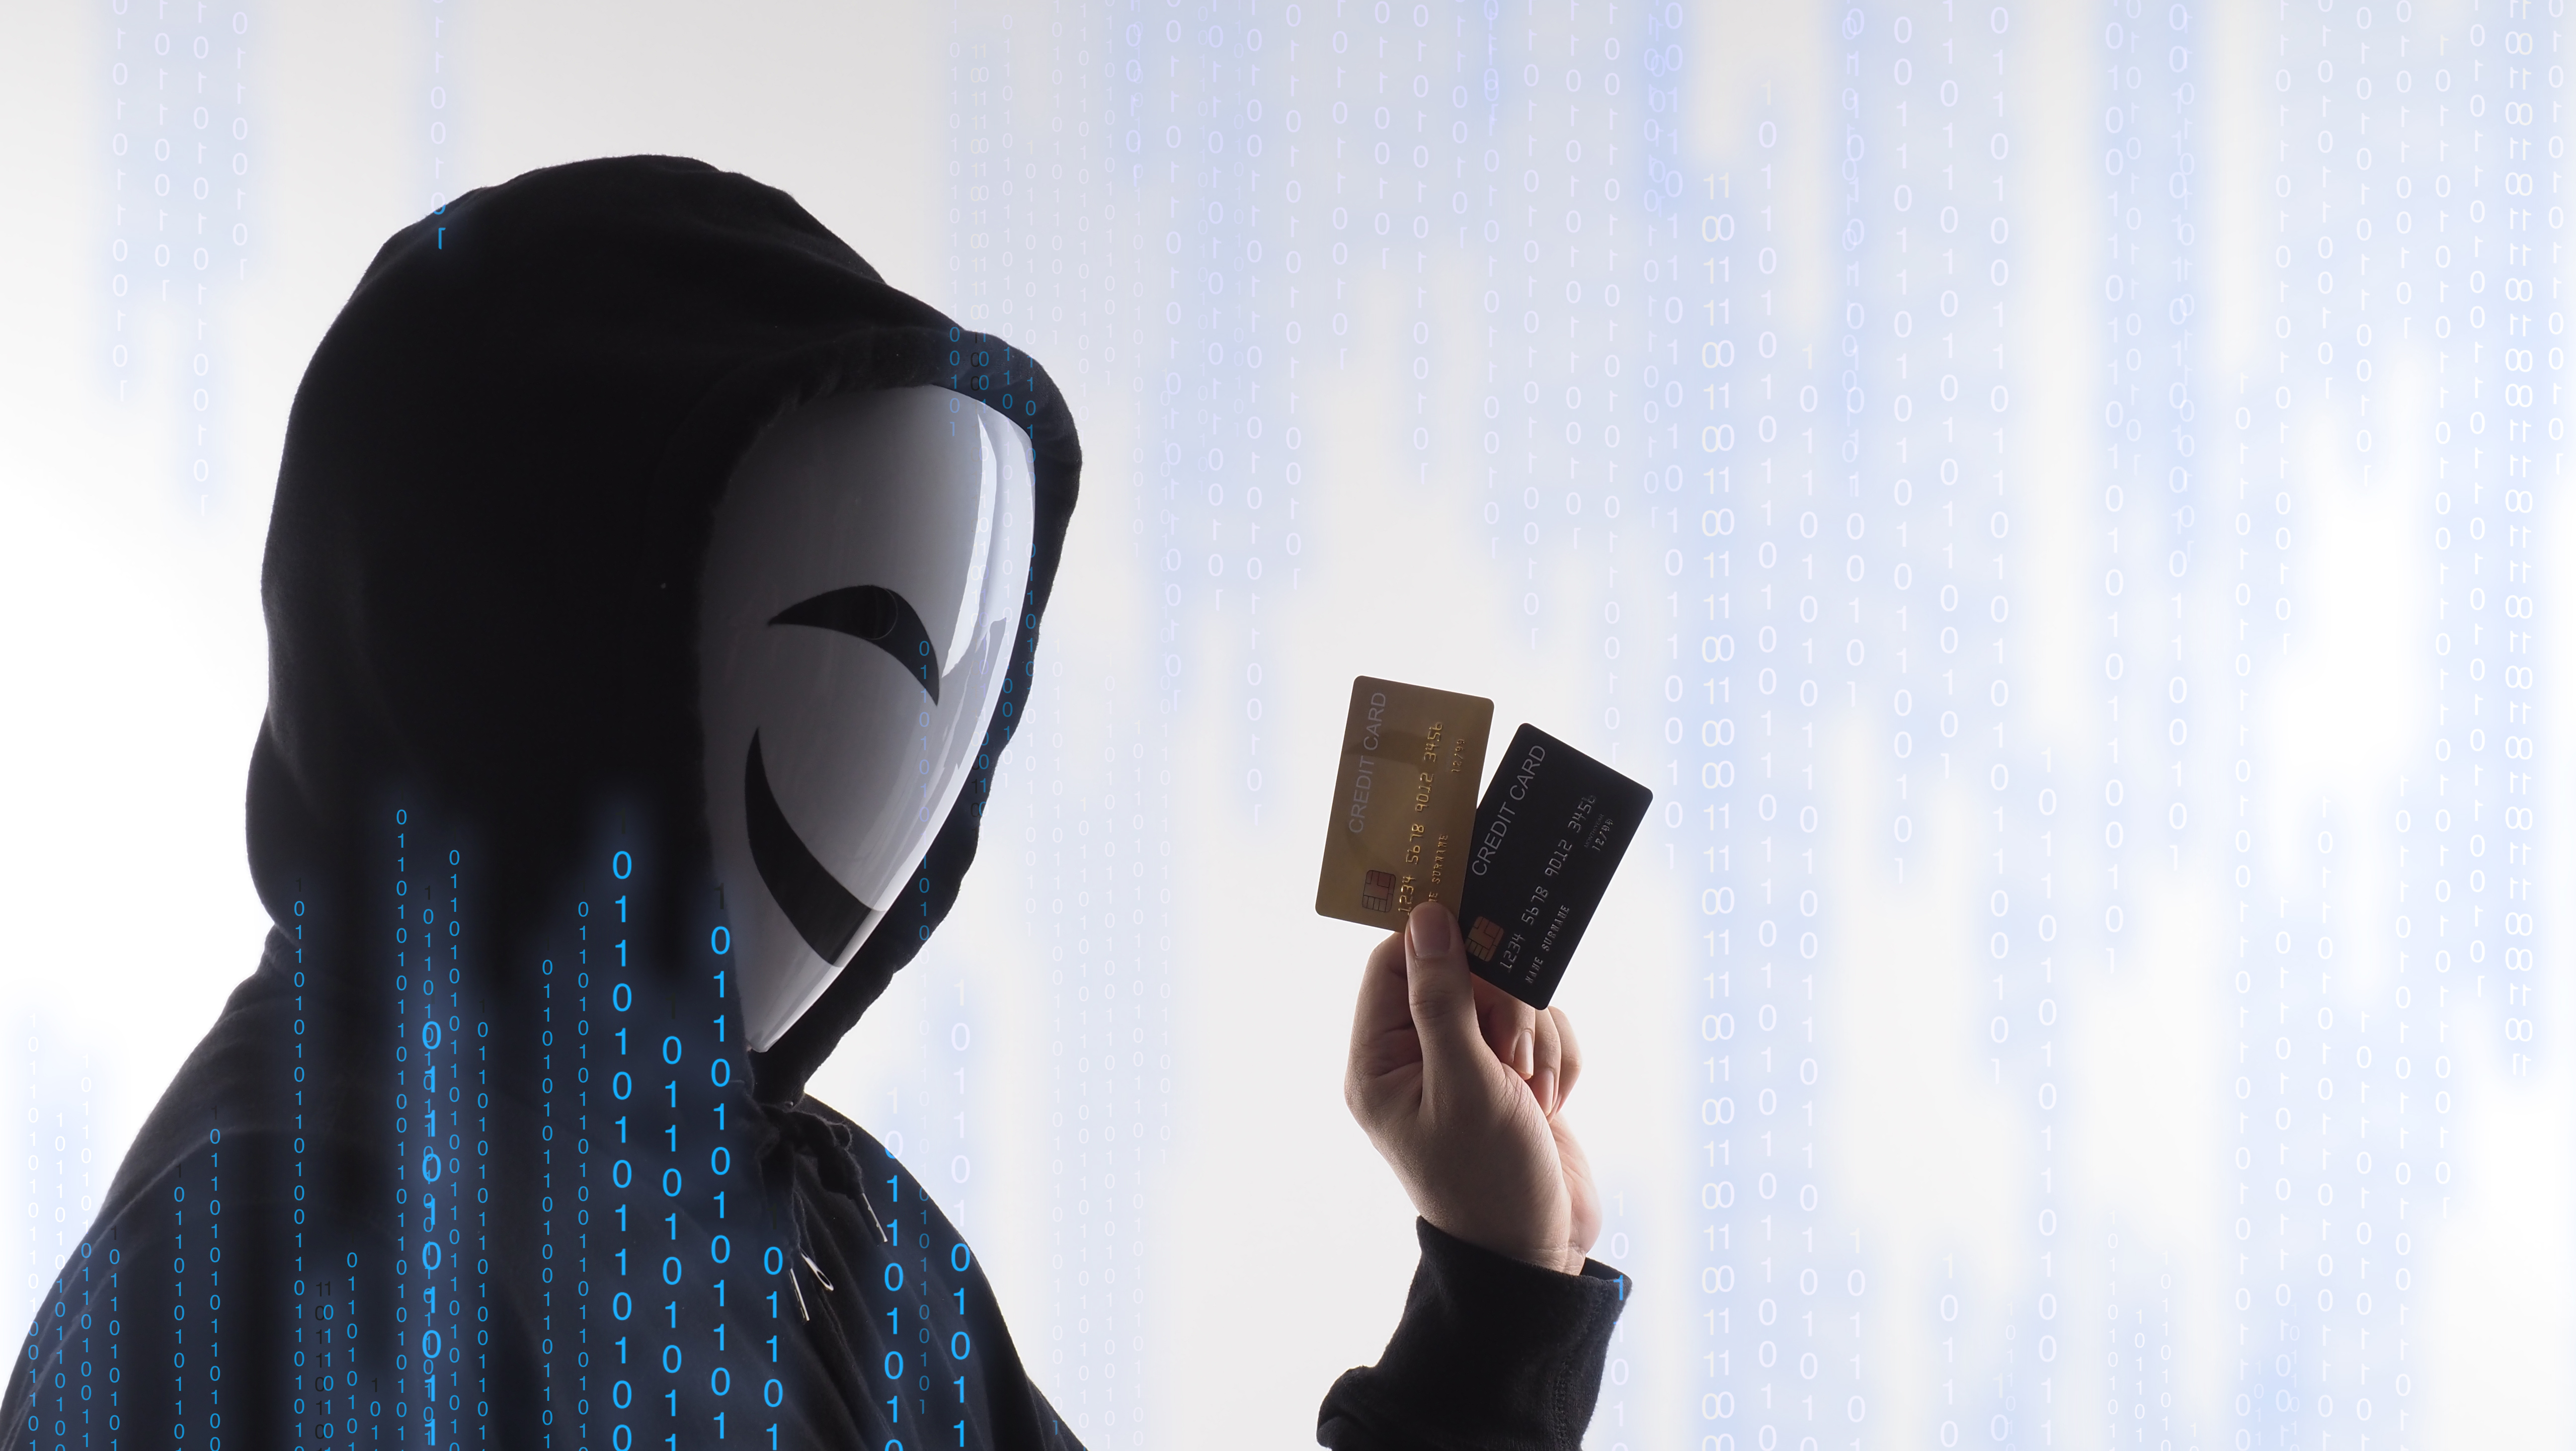 Hacker-stieling-credit-cards-data-1348335.jpg